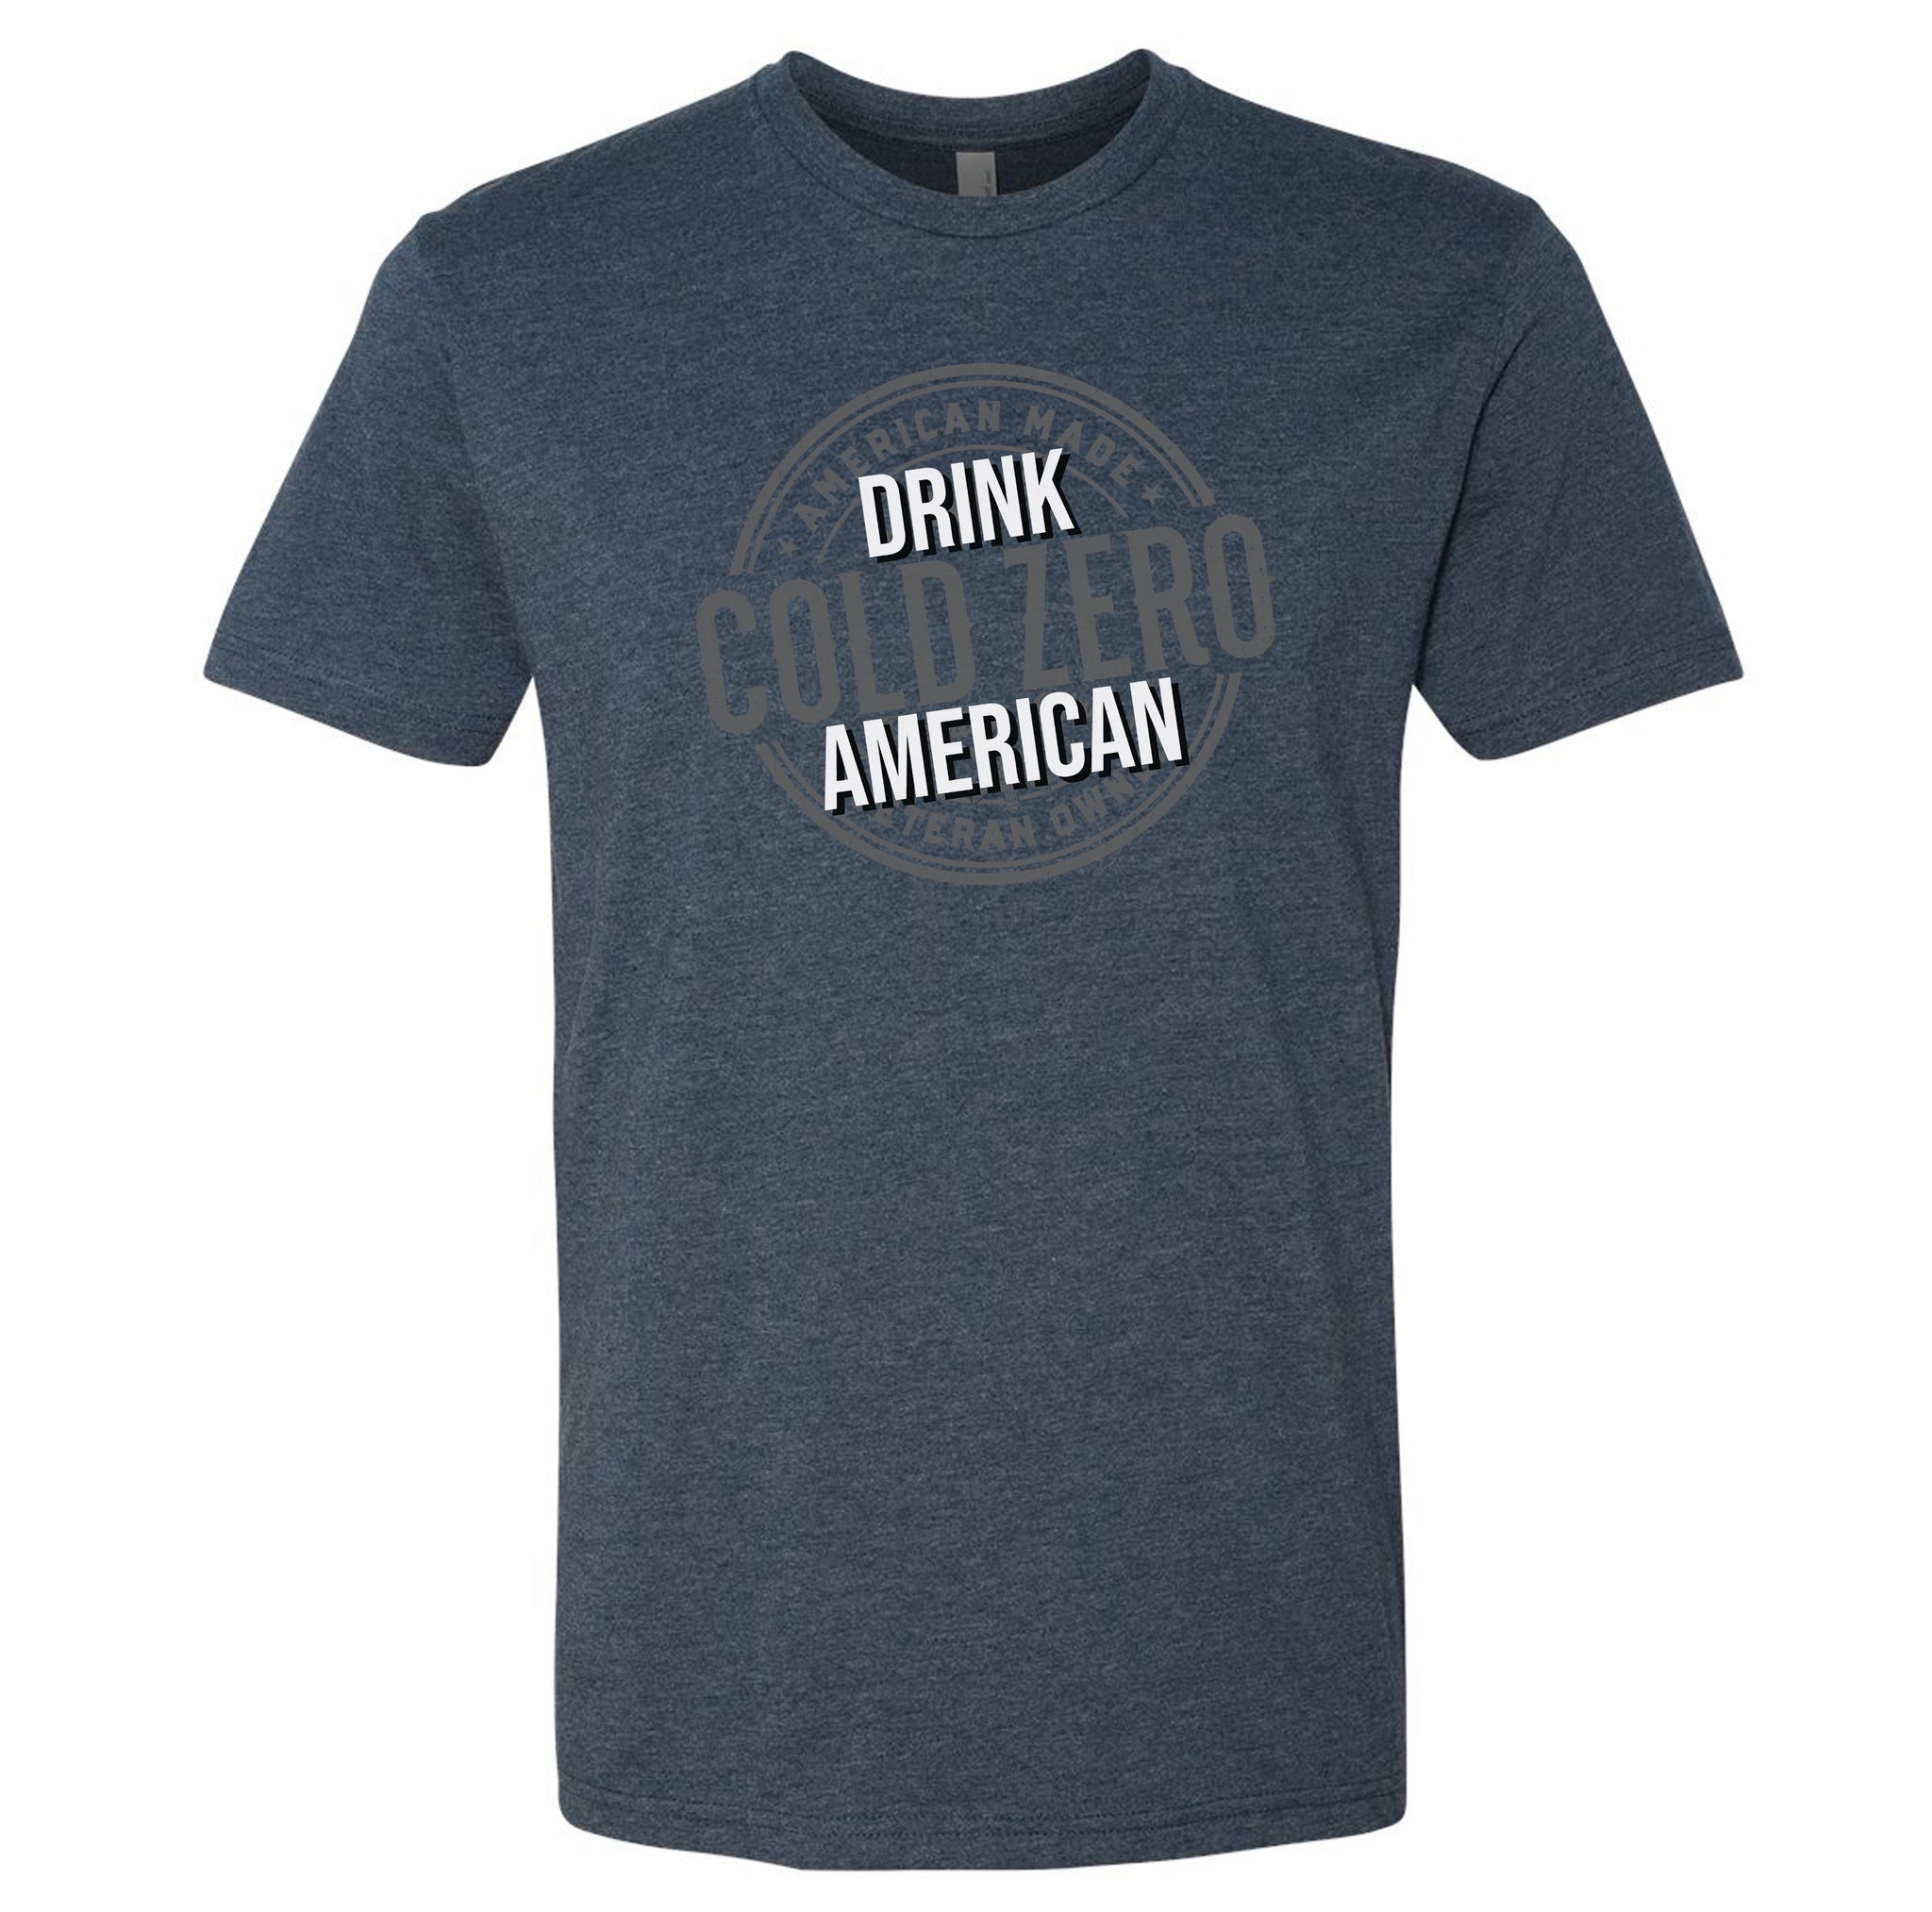 Drink American